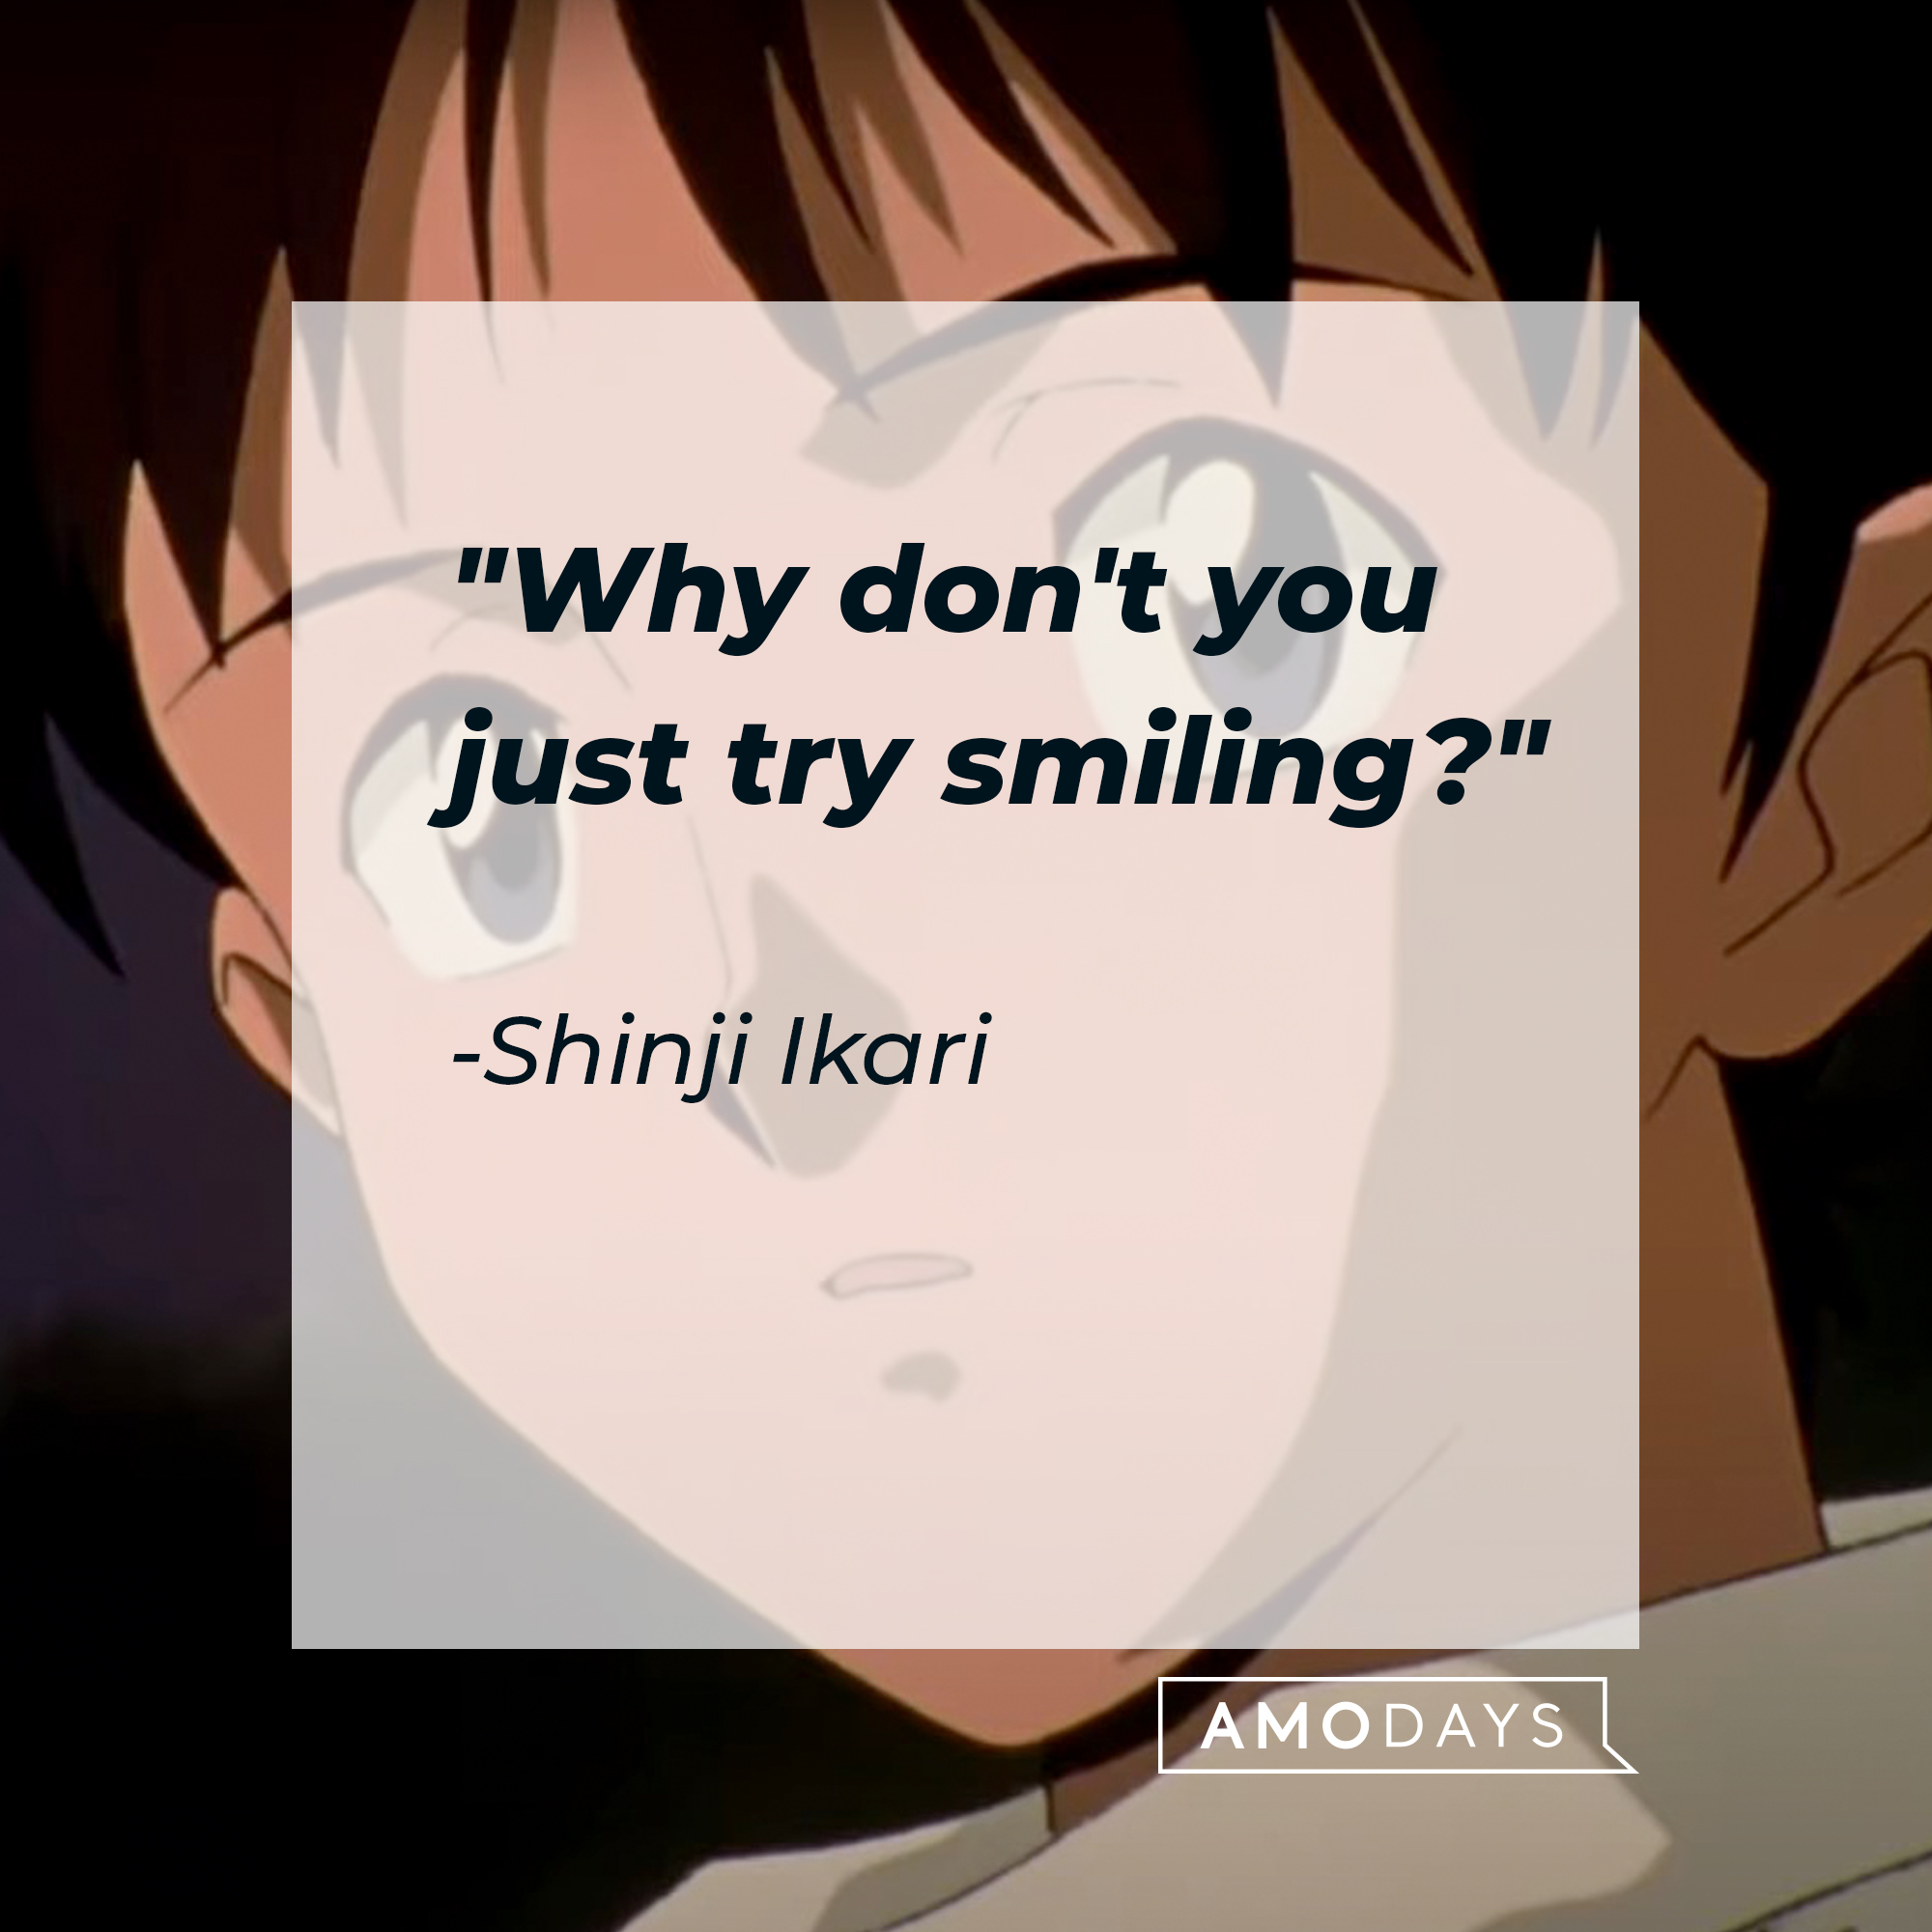 Shinji Ikari's quote: "Why don't you just try smiling?" | Source: Facebook.com/EvangelionMovie